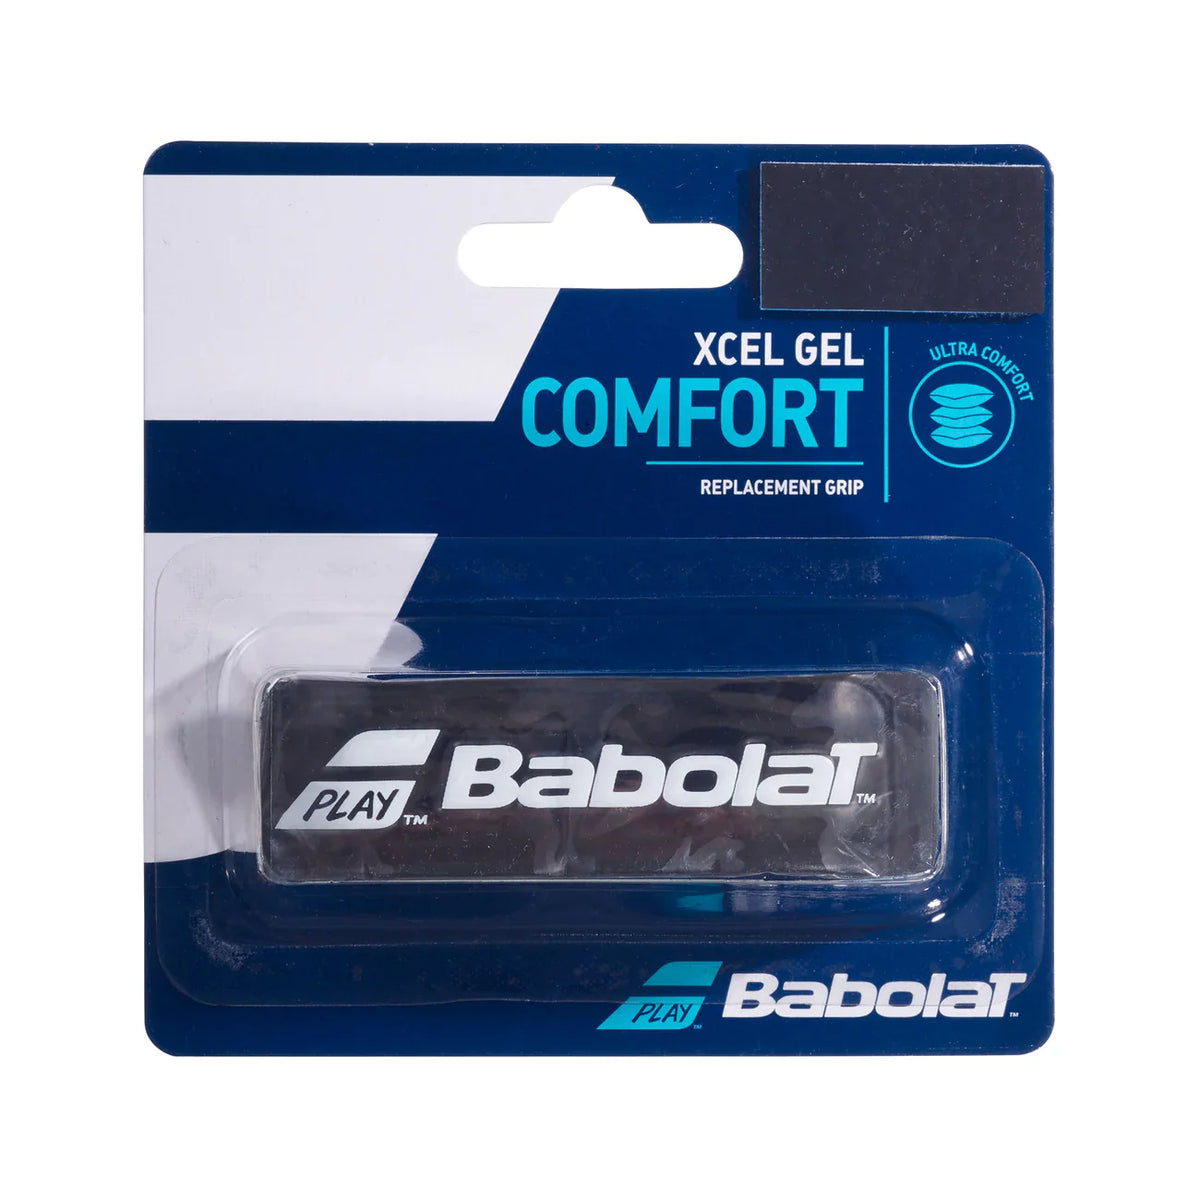 Babolat Xcel Gel Comfort Tennis Grips (Single) Black